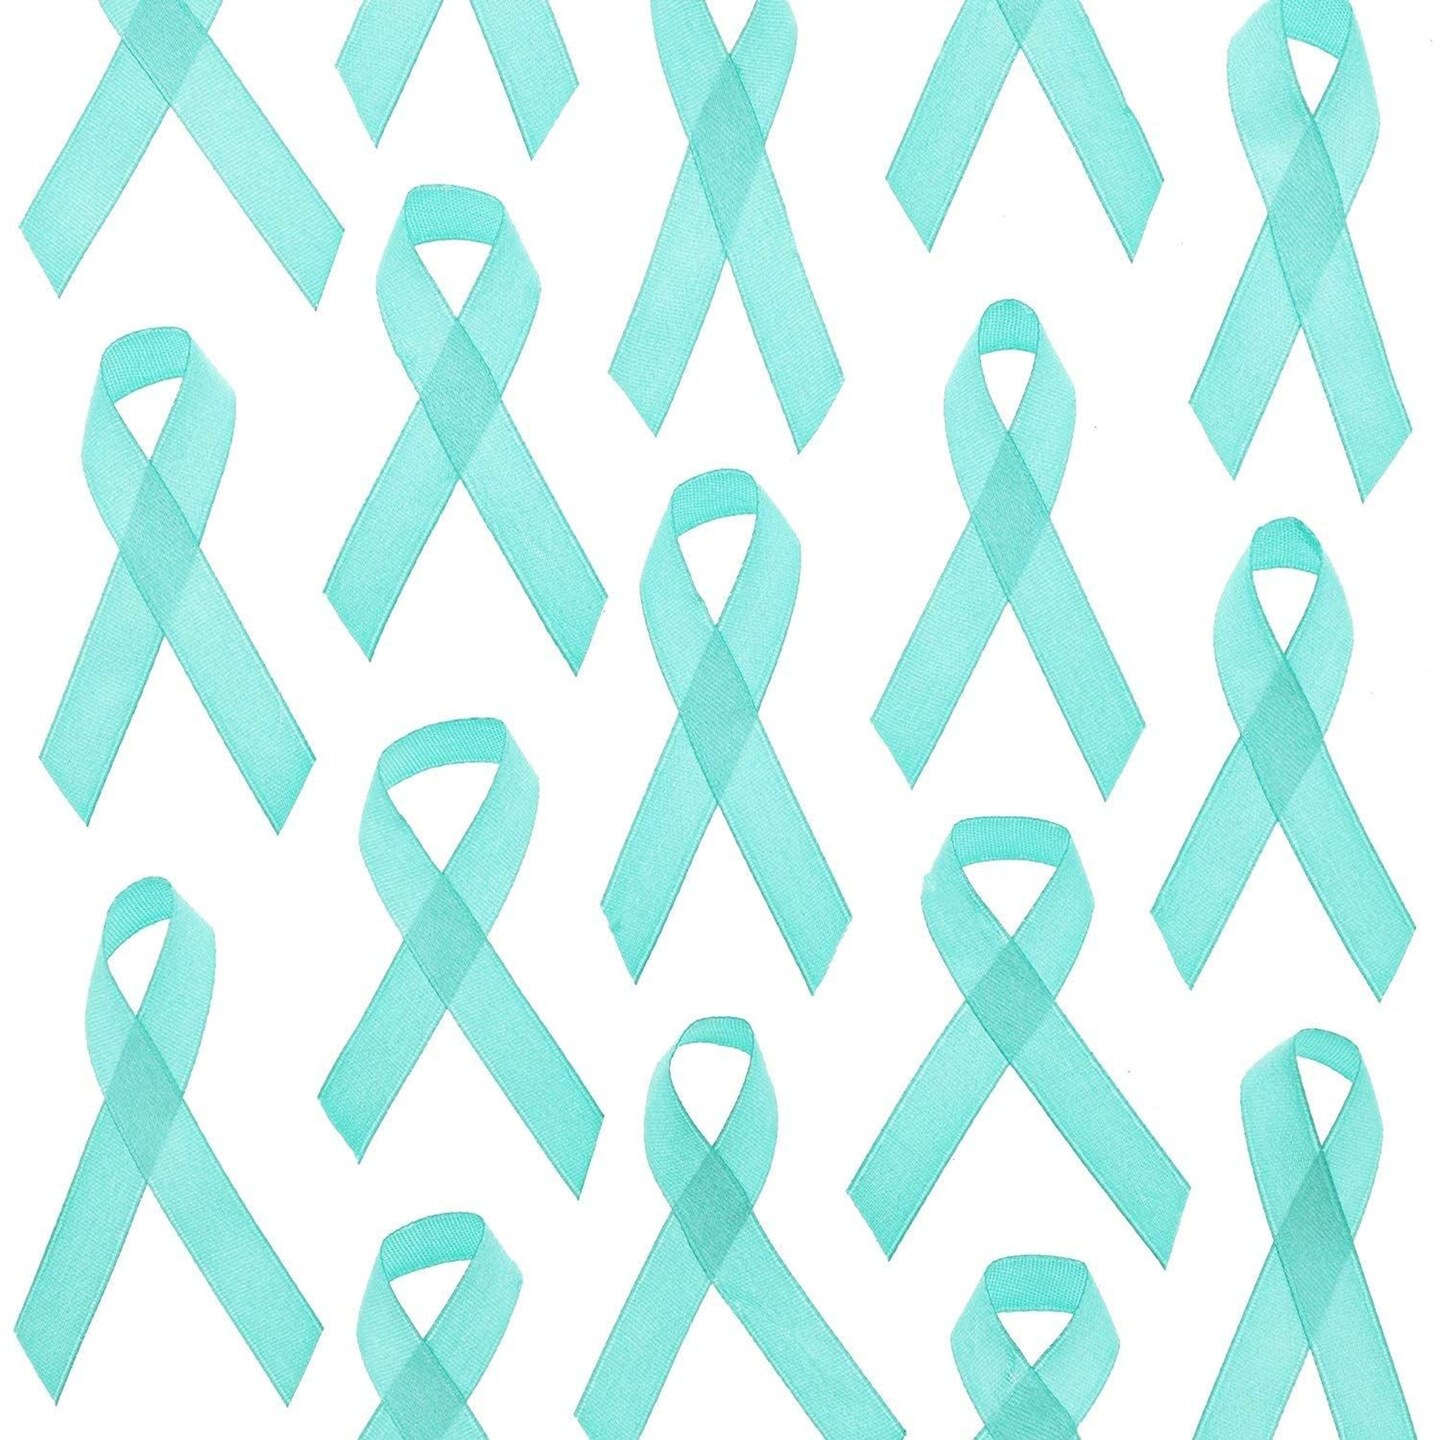 Personalized Light Blue Fabric Awareness Ribbons (Bulk)